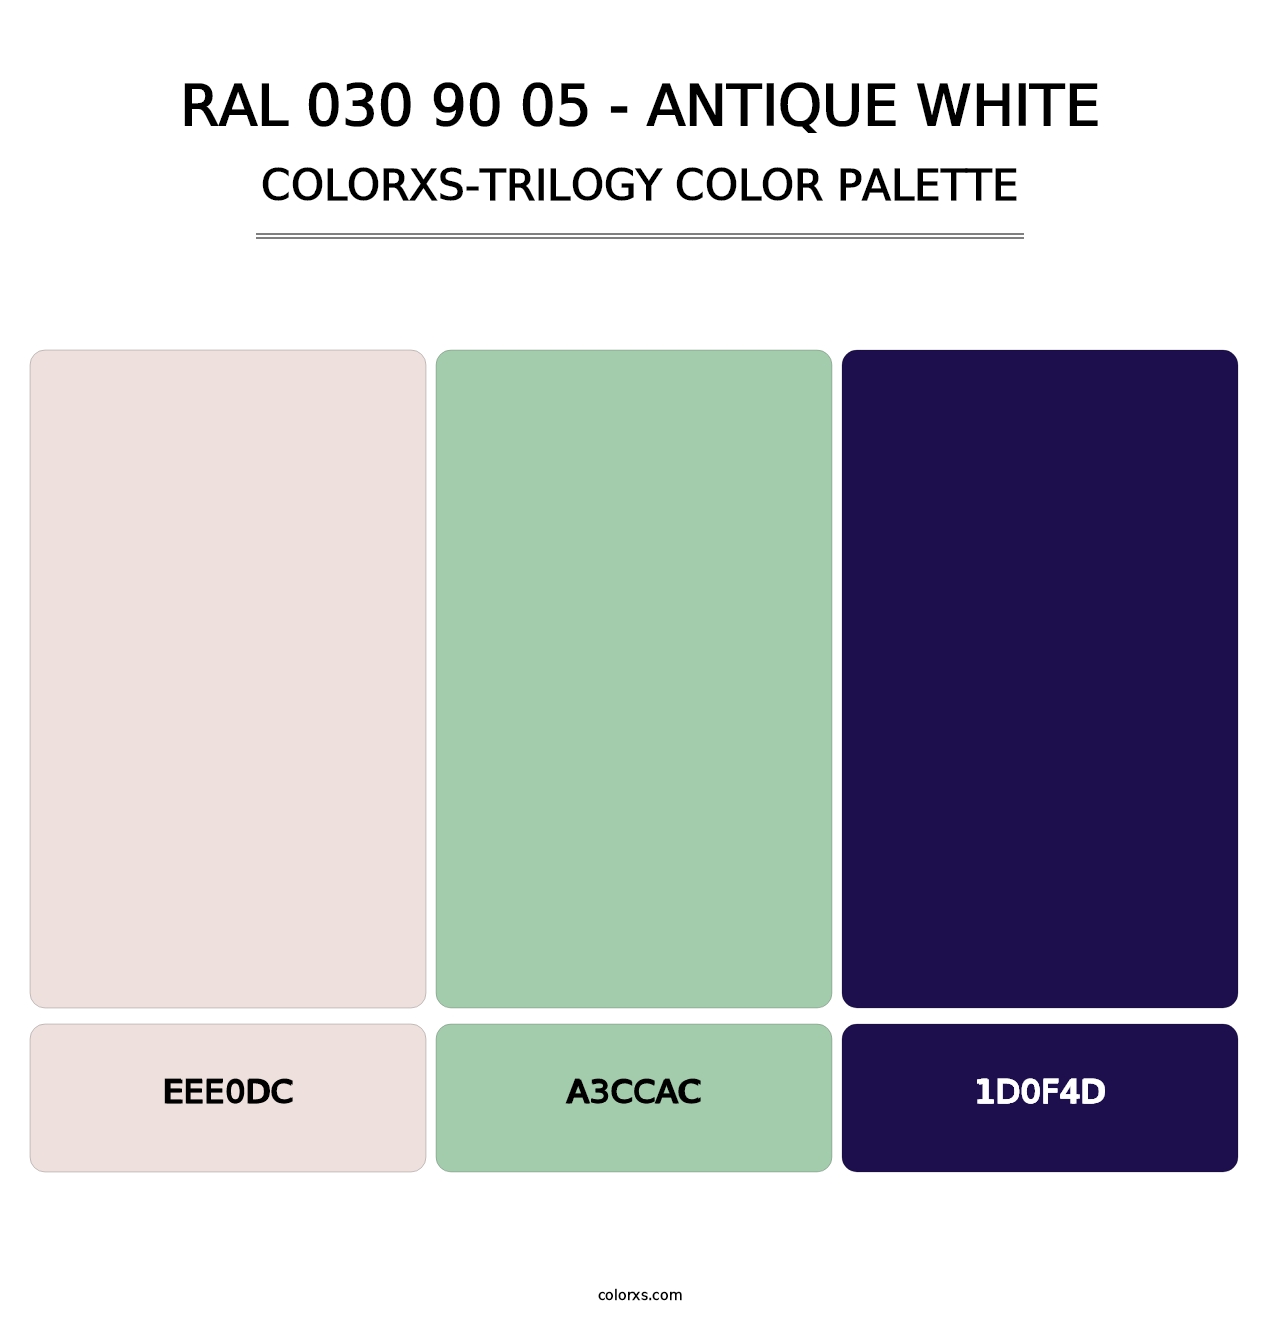 RAL 030 90 05 - Antique White - Colorxs Trilogy Palette